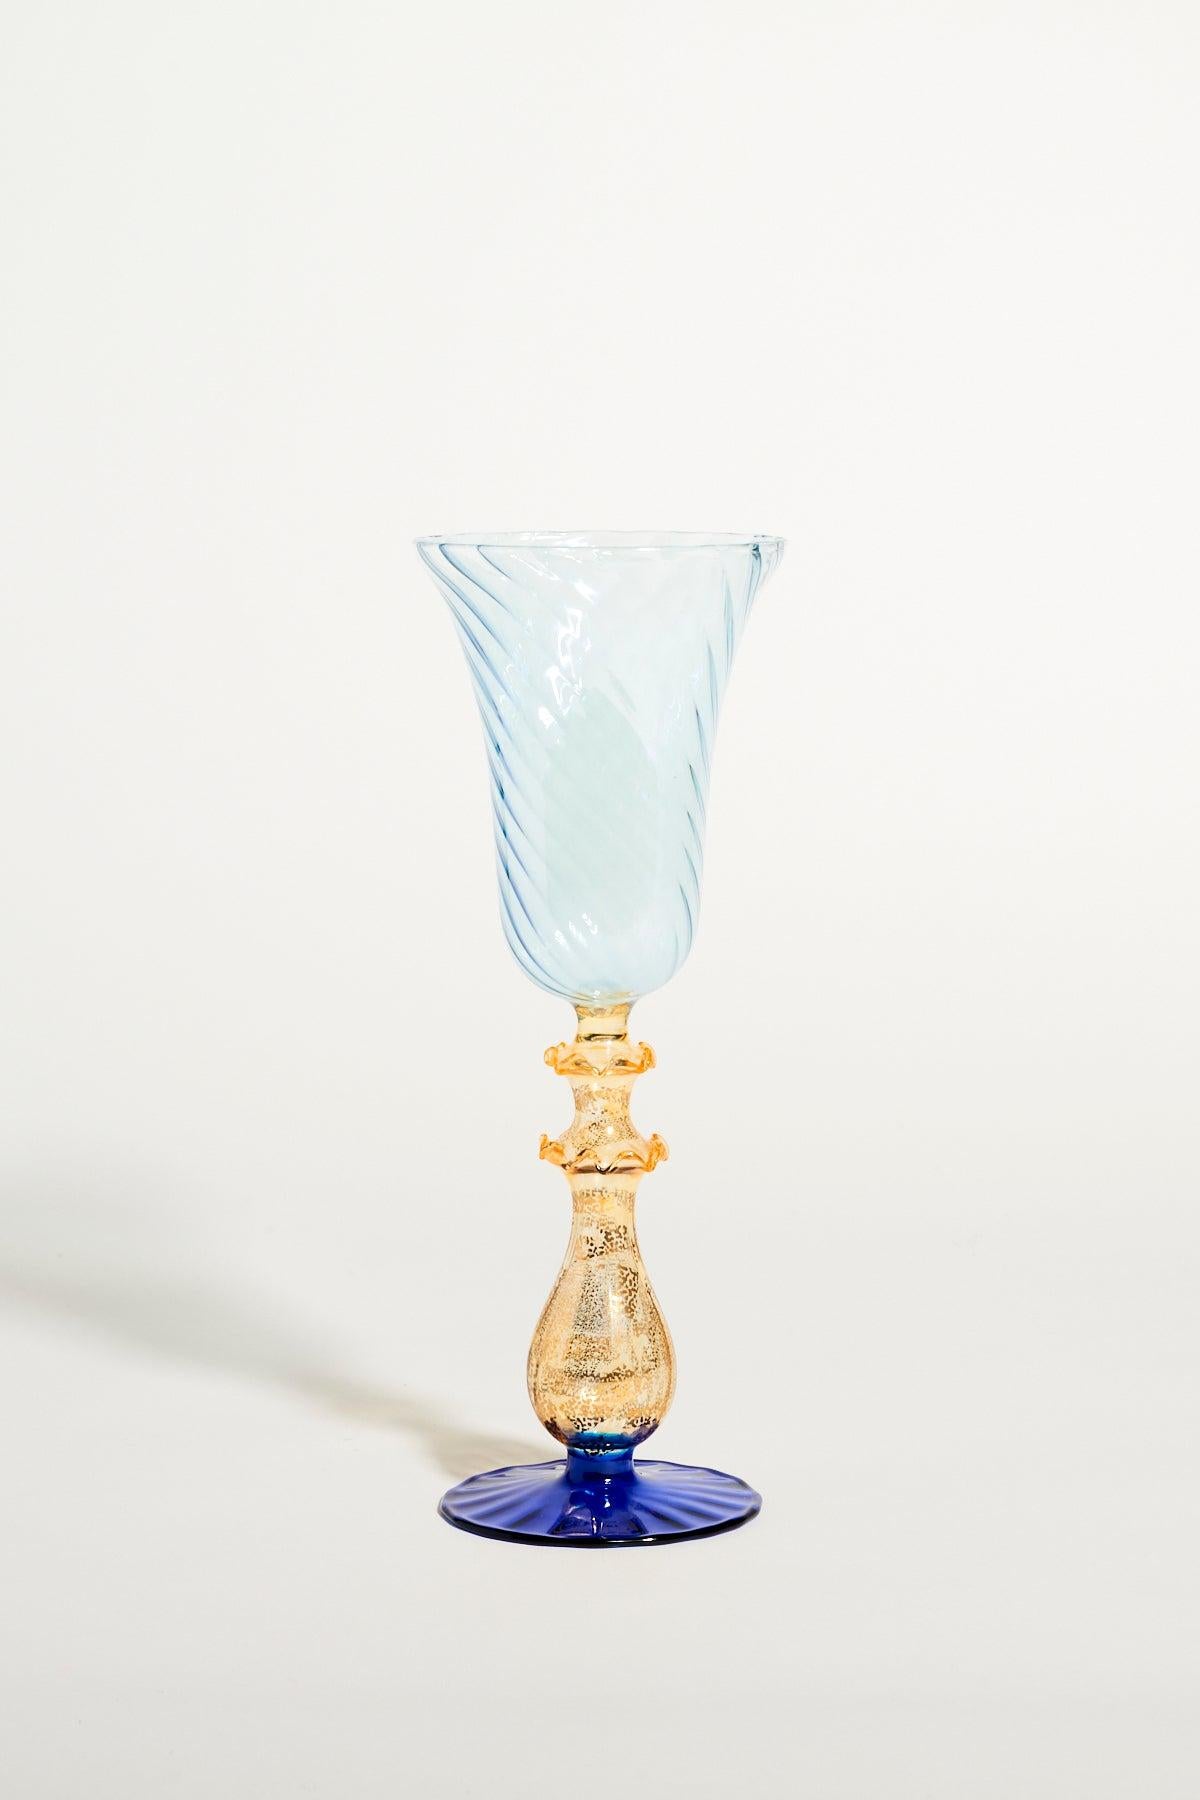 Venetian blown glass goblet with metallic amber gold stem.